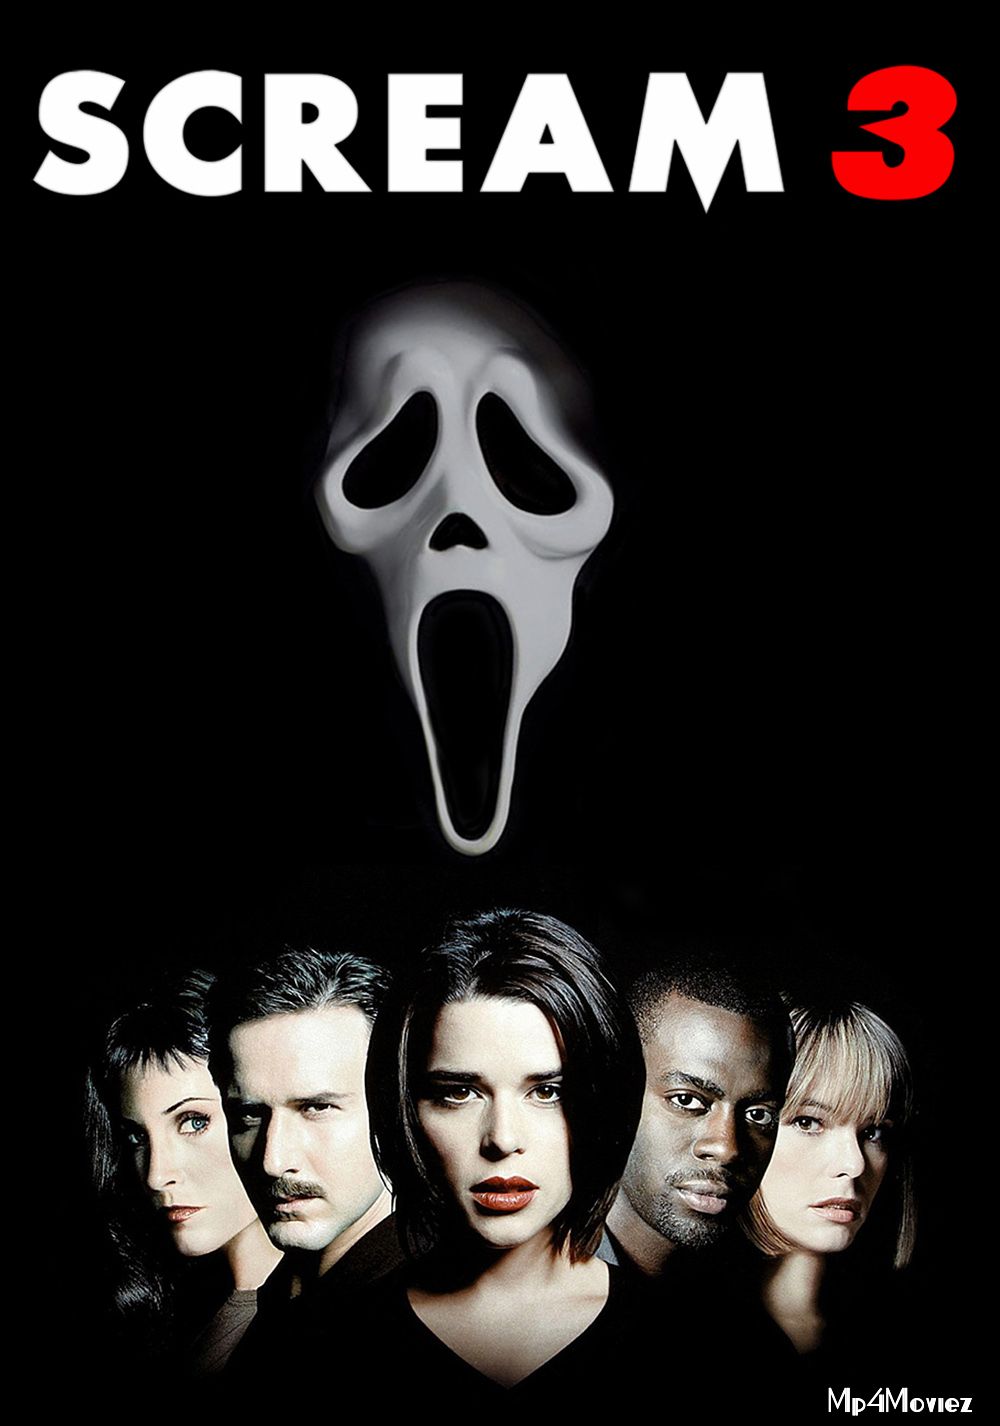 Scream 3 (2000) Hindi Dubbed Movie download full movie